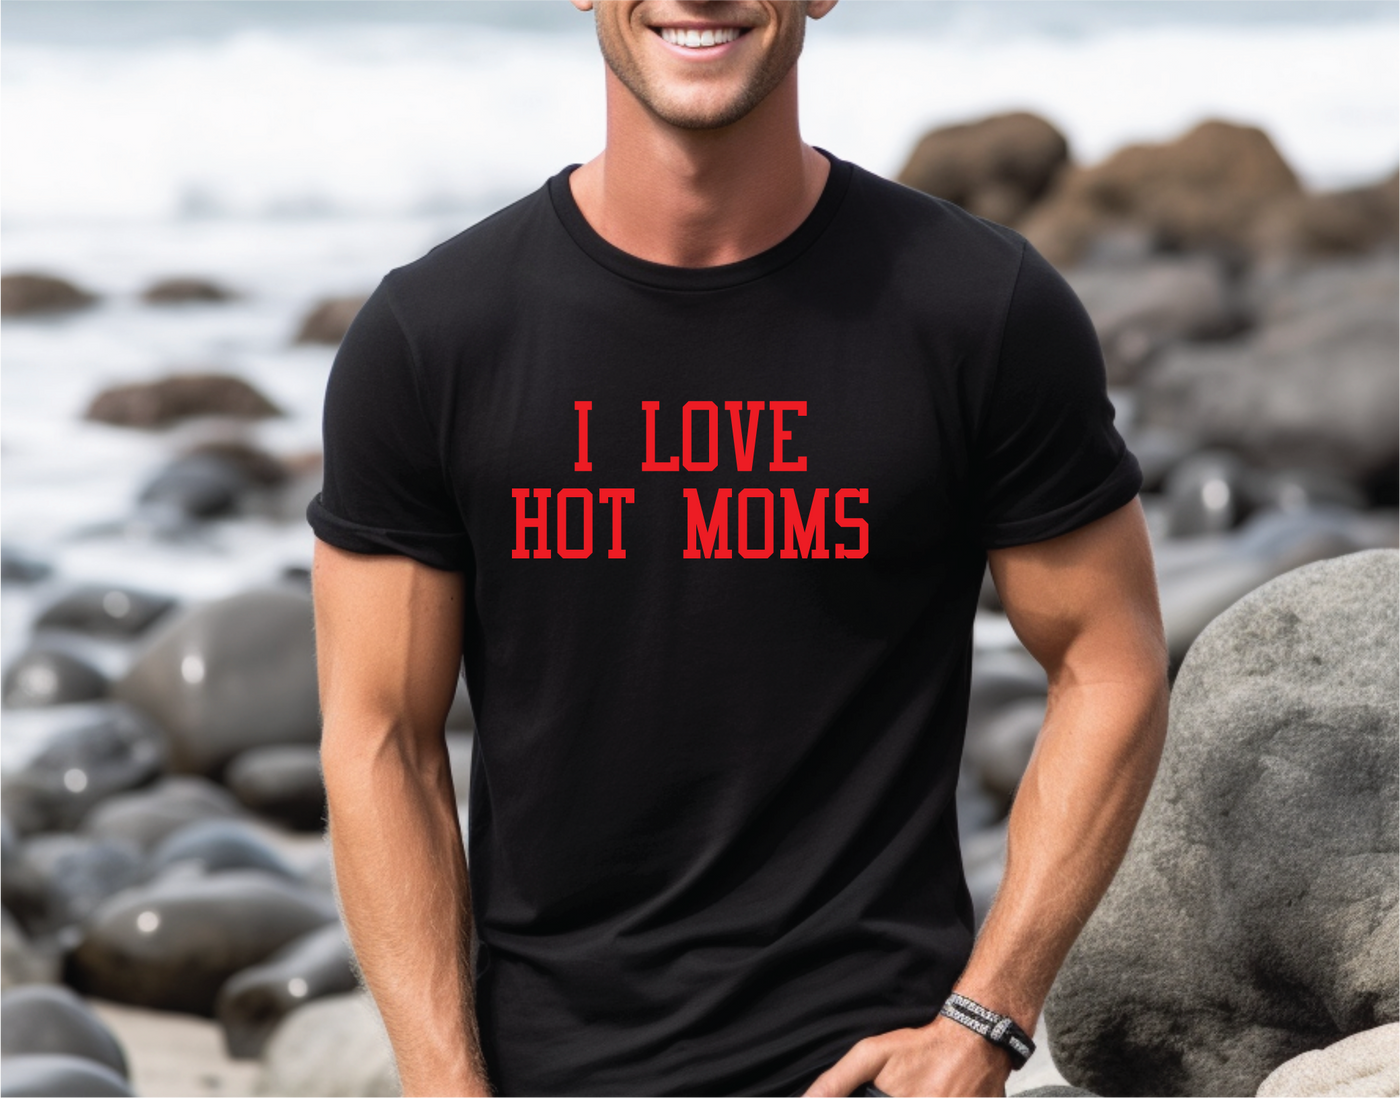 I LOVE HOT MOMS T-SHIRT